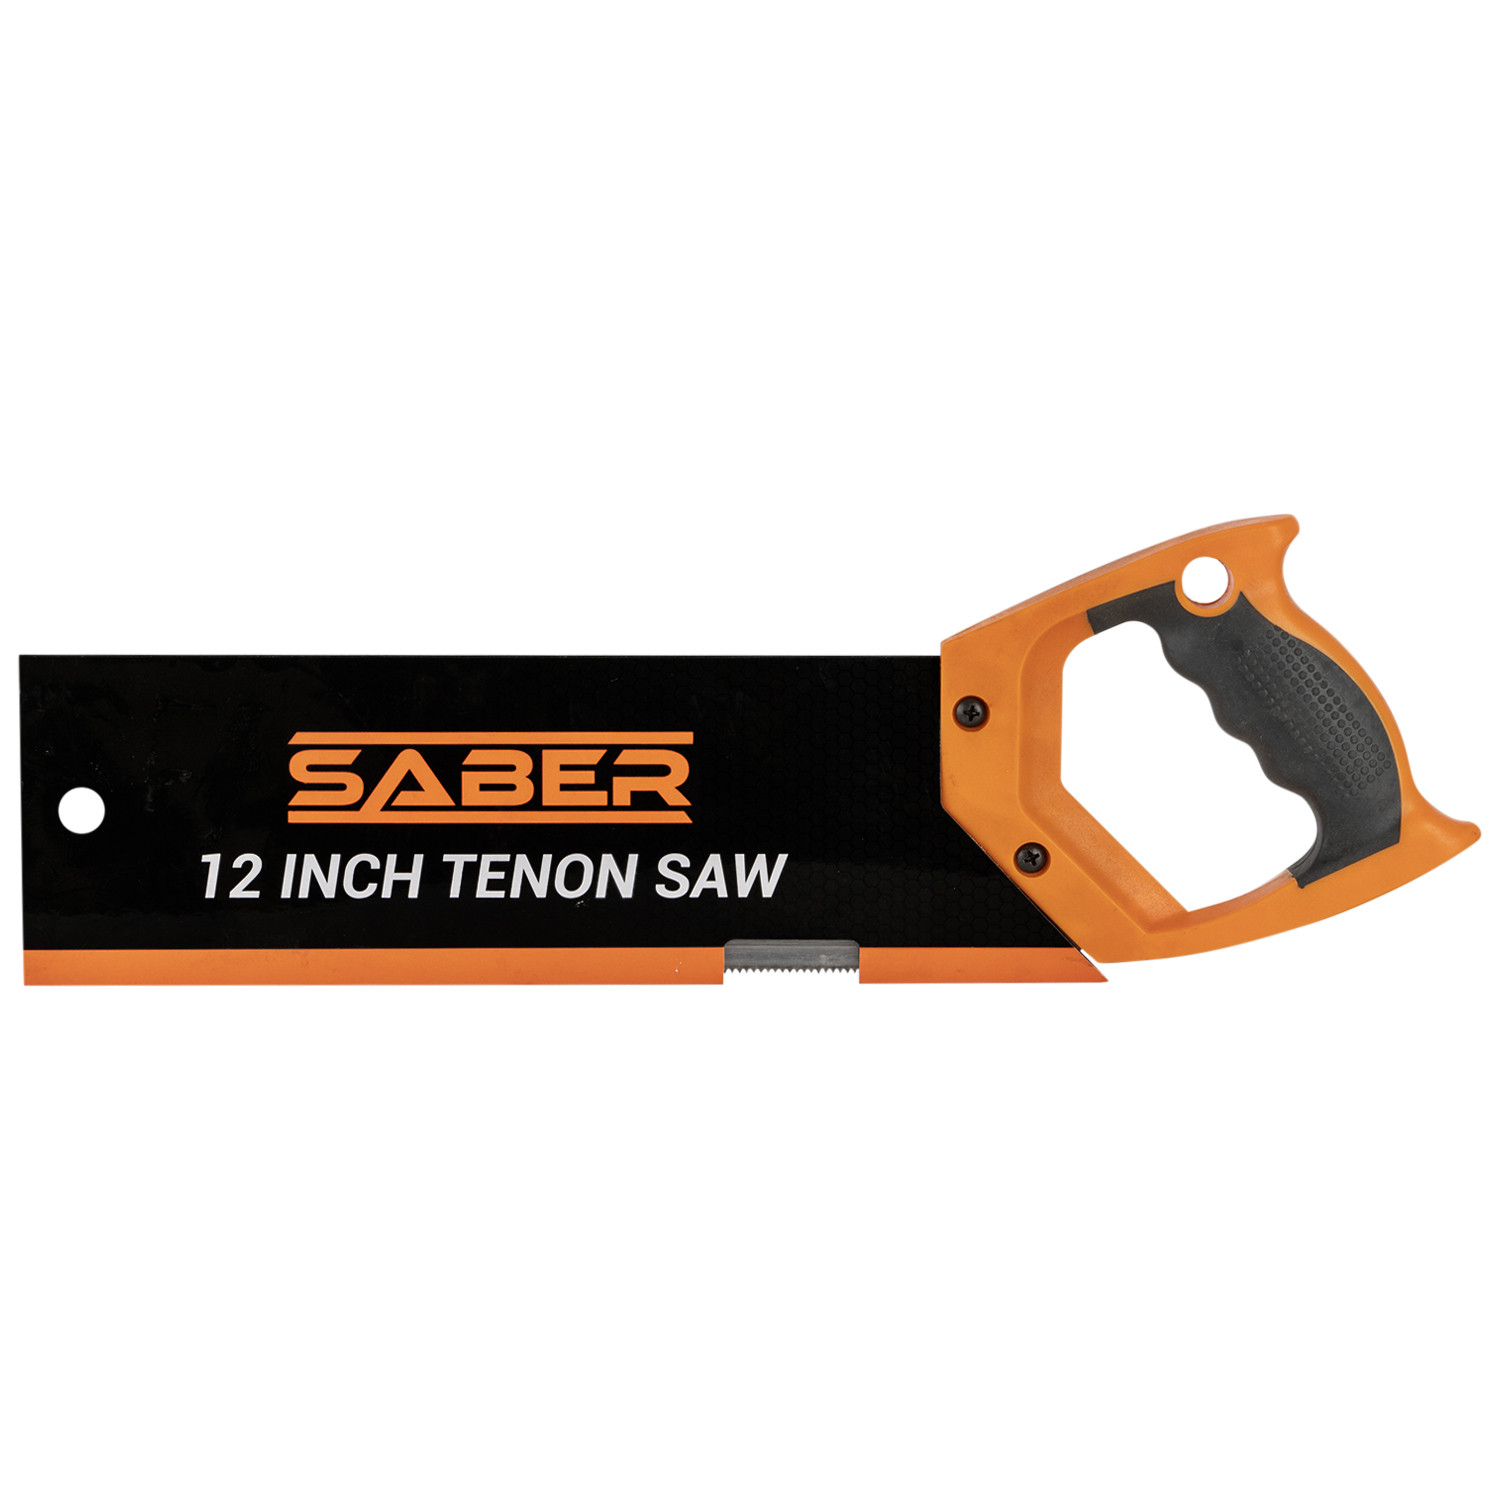 Saber Tenon Saw 12 inch Image